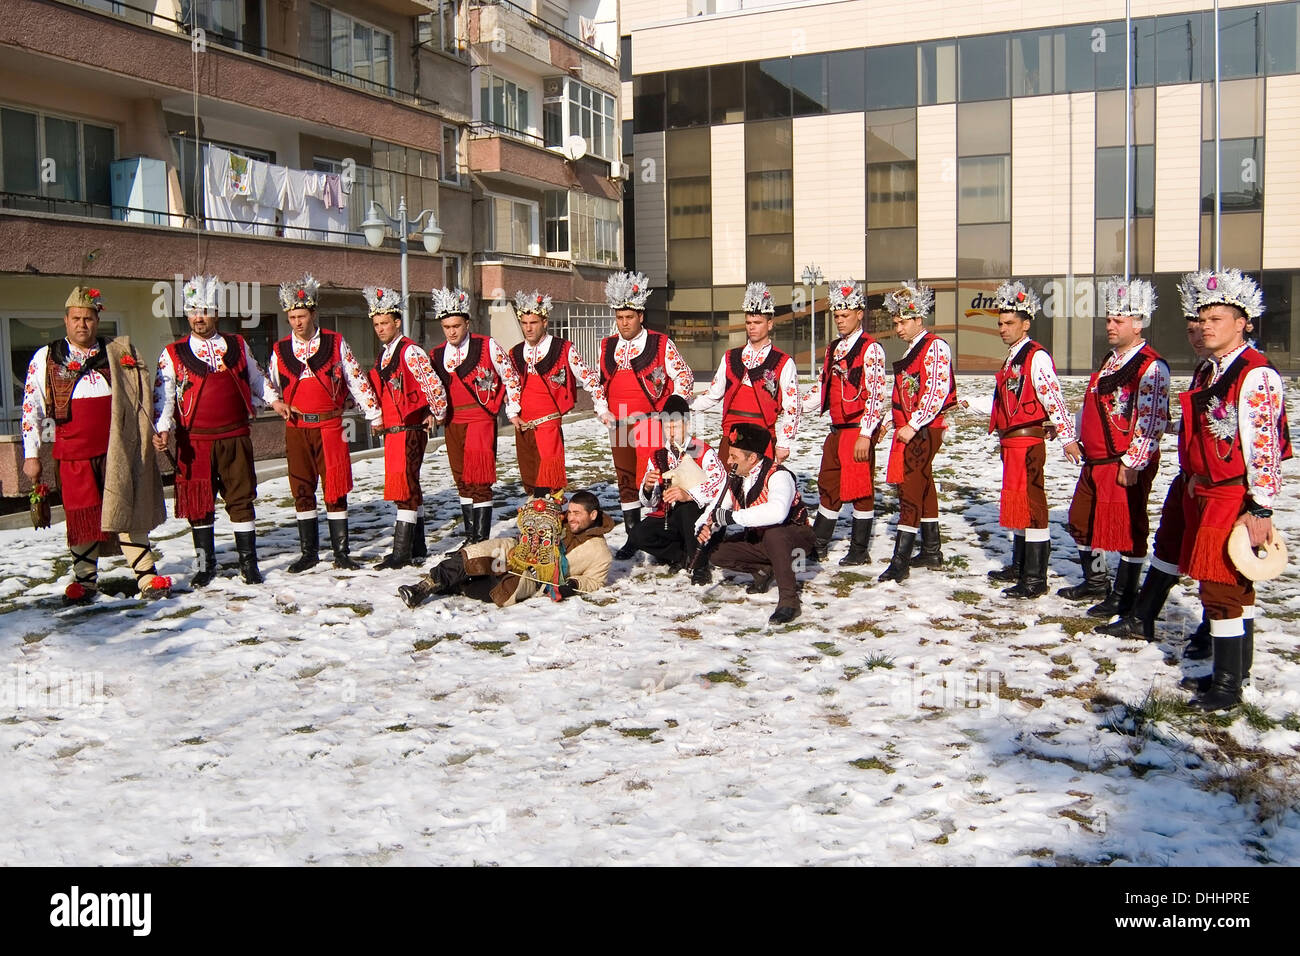 Koledari singers on Christmas Day celebrations Team Picture Stock Photo